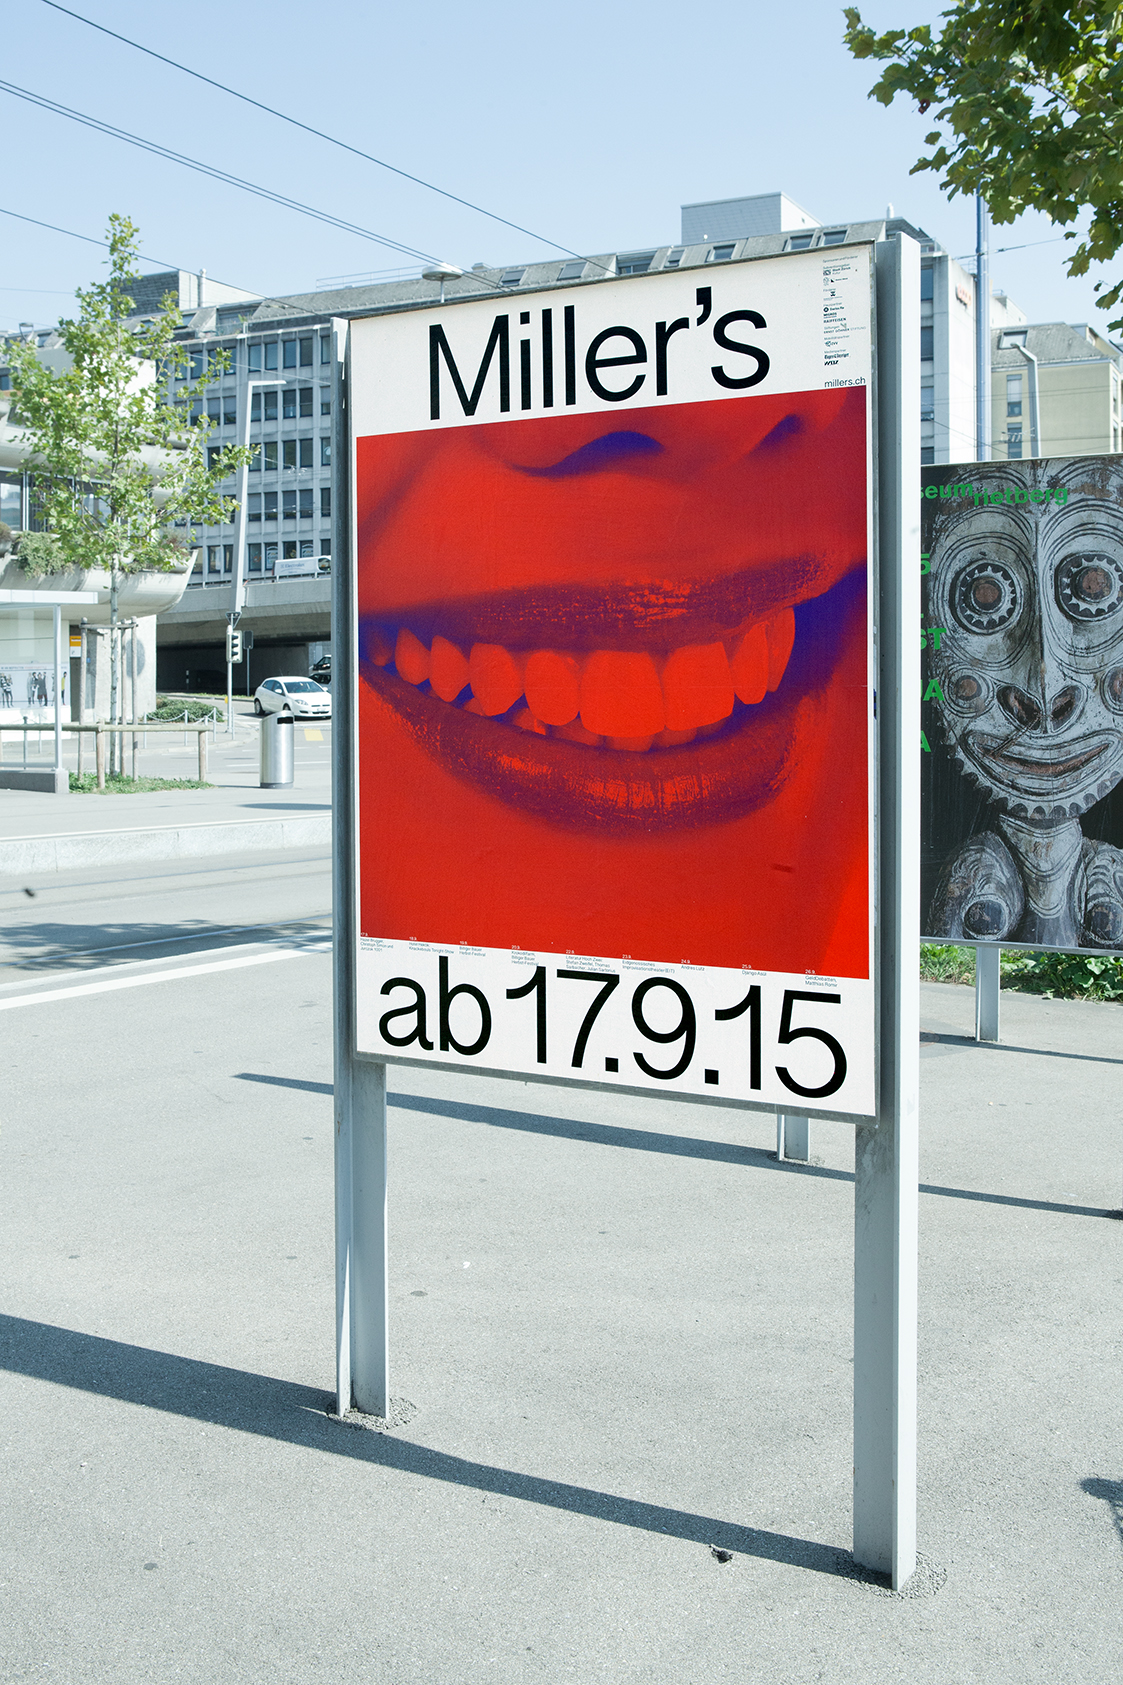 Miller’s, Seasonal Opening 15/16, Image campaigns